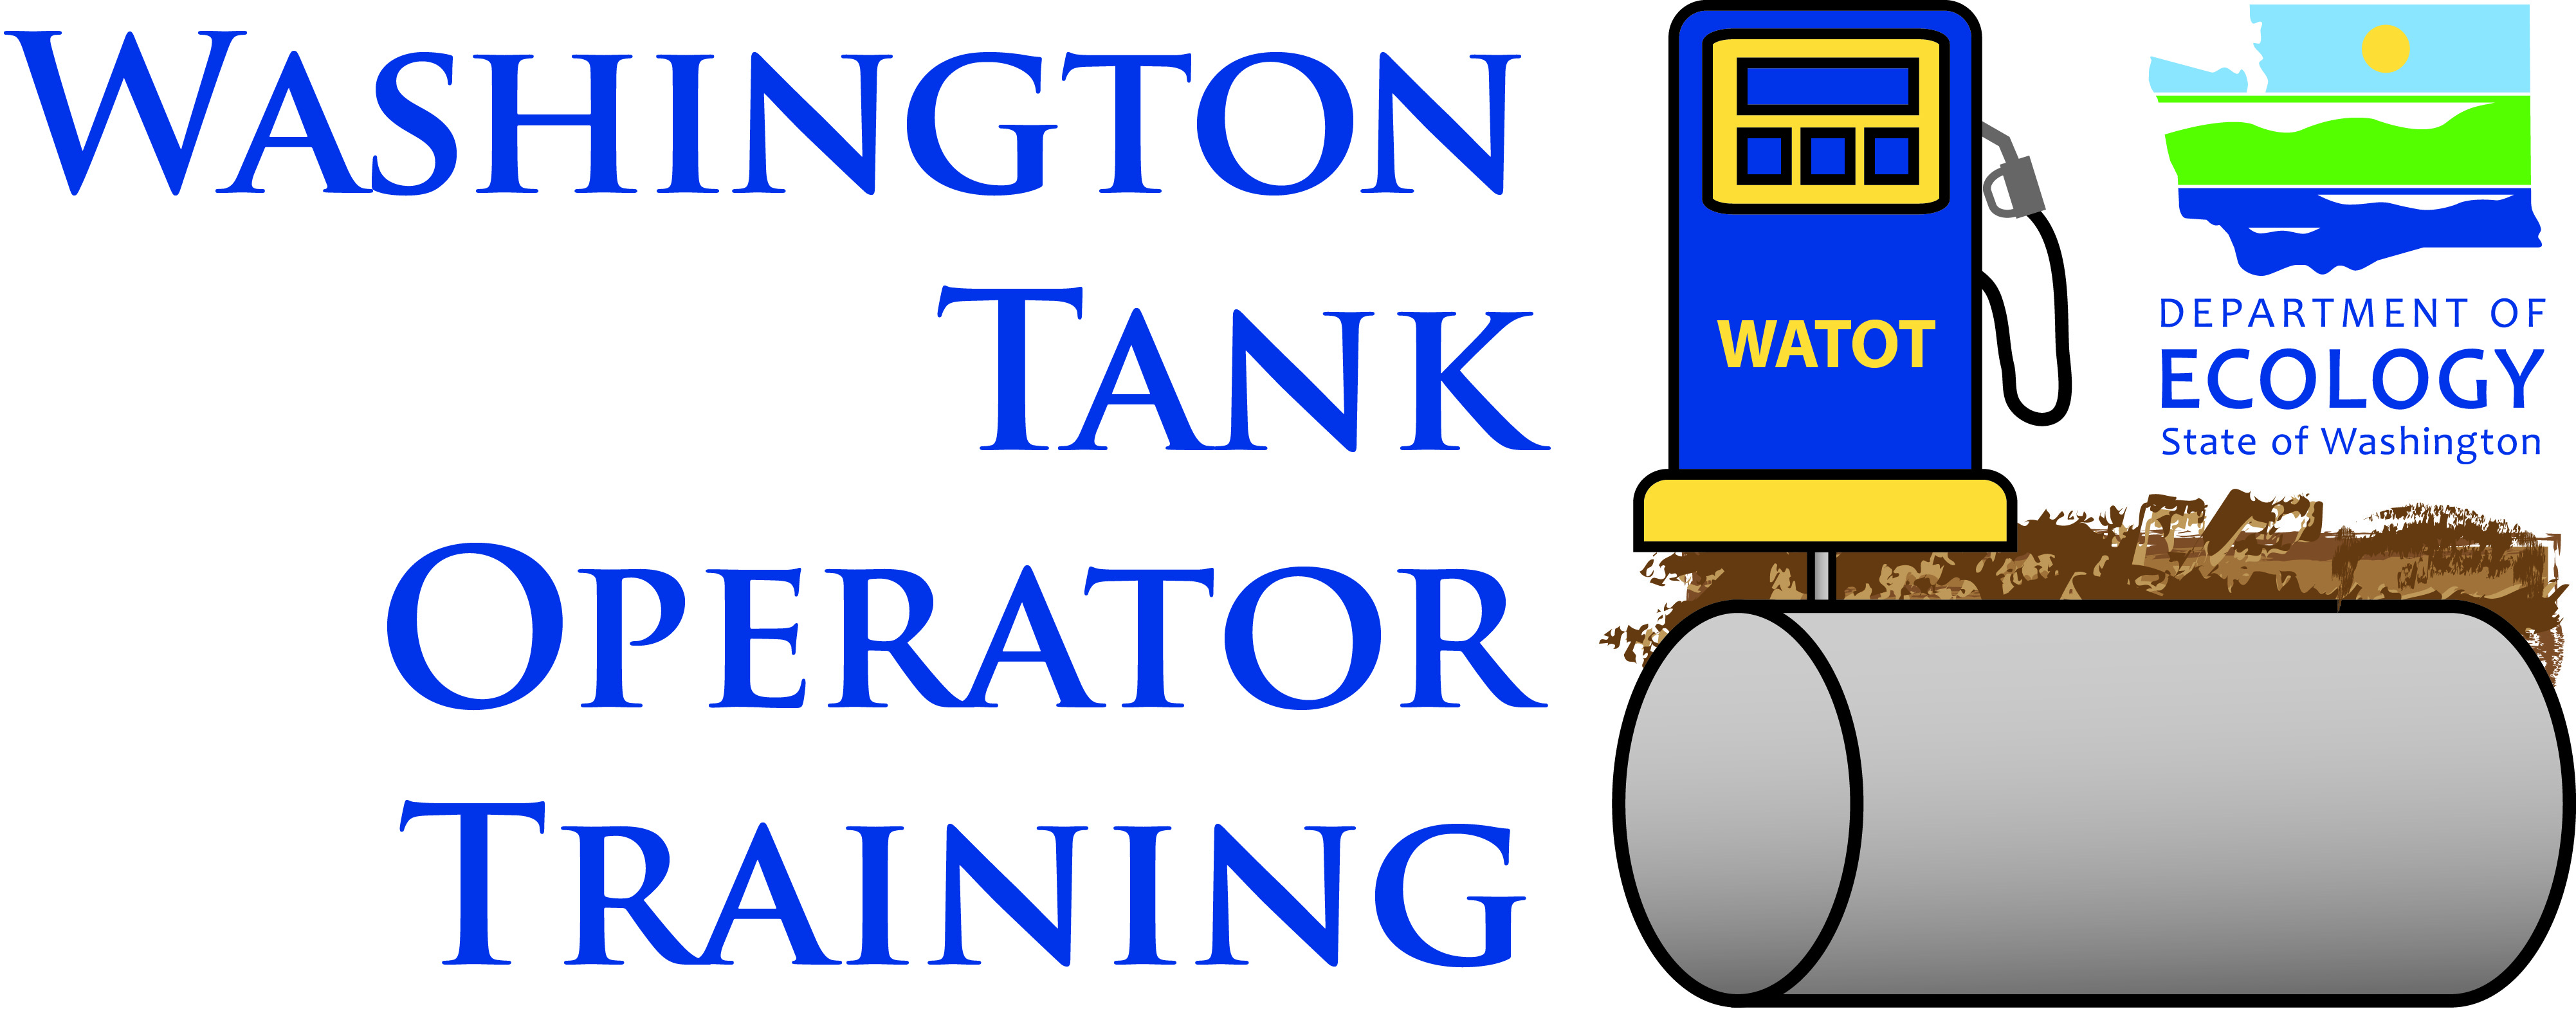 Washington Tank Operator Training logo